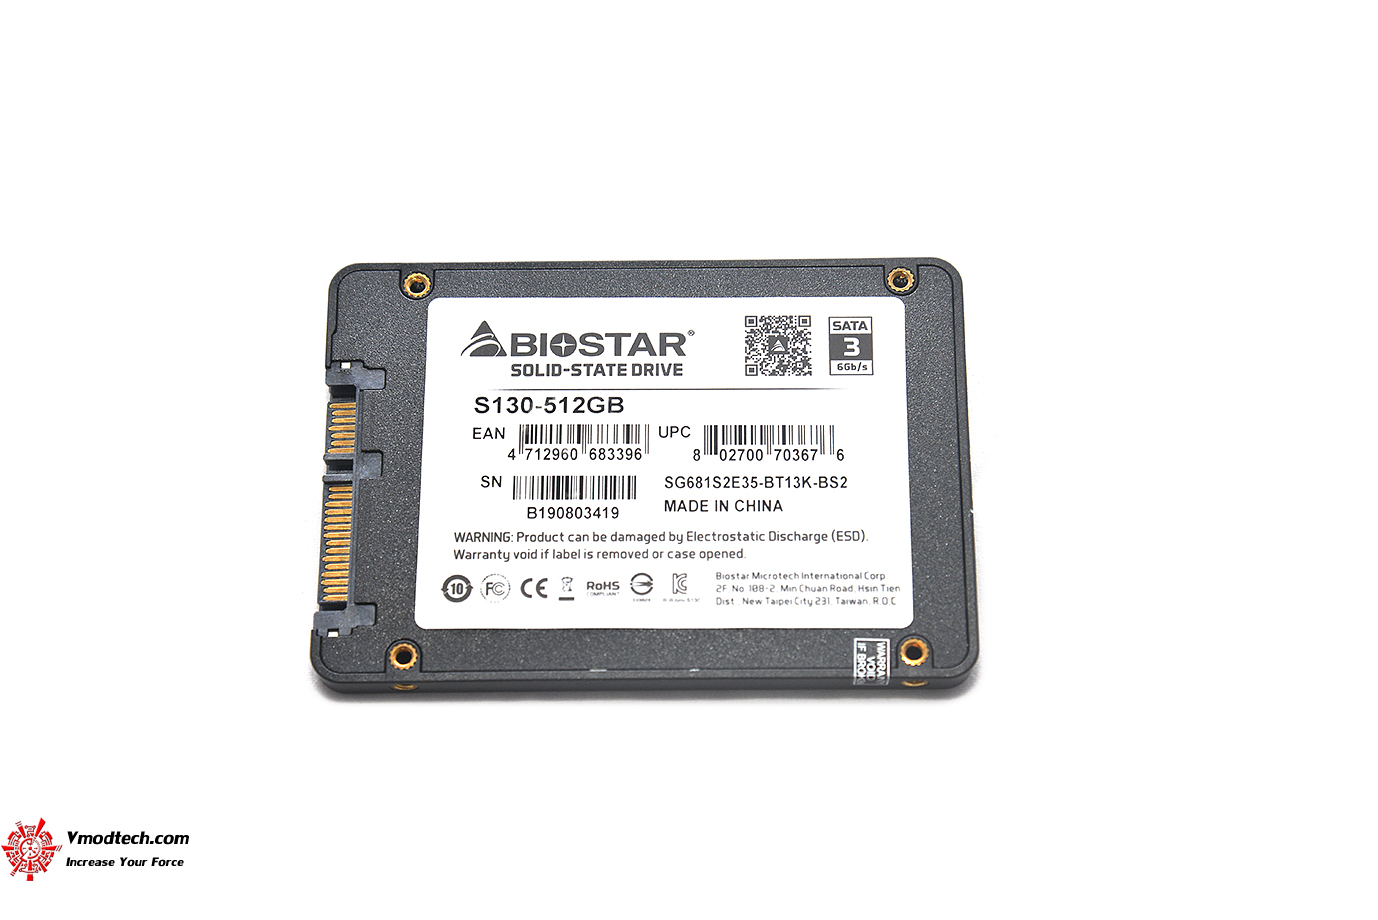 dsc 99375 Biostar SSD S130 512GB Review